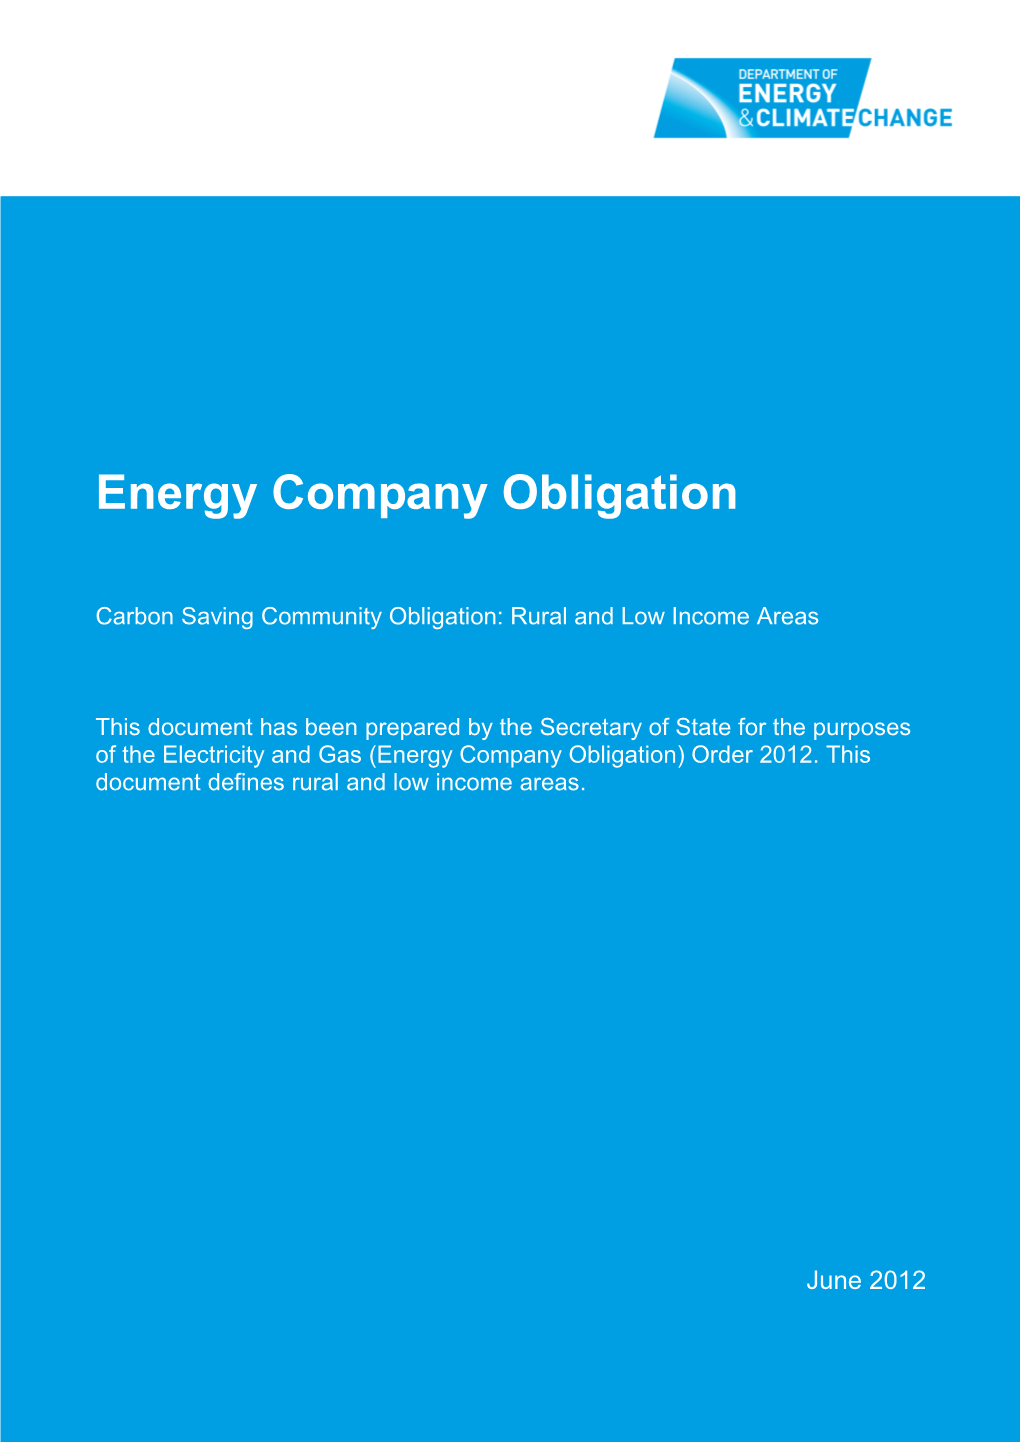 Energy Company Obligation, Carbon Saving